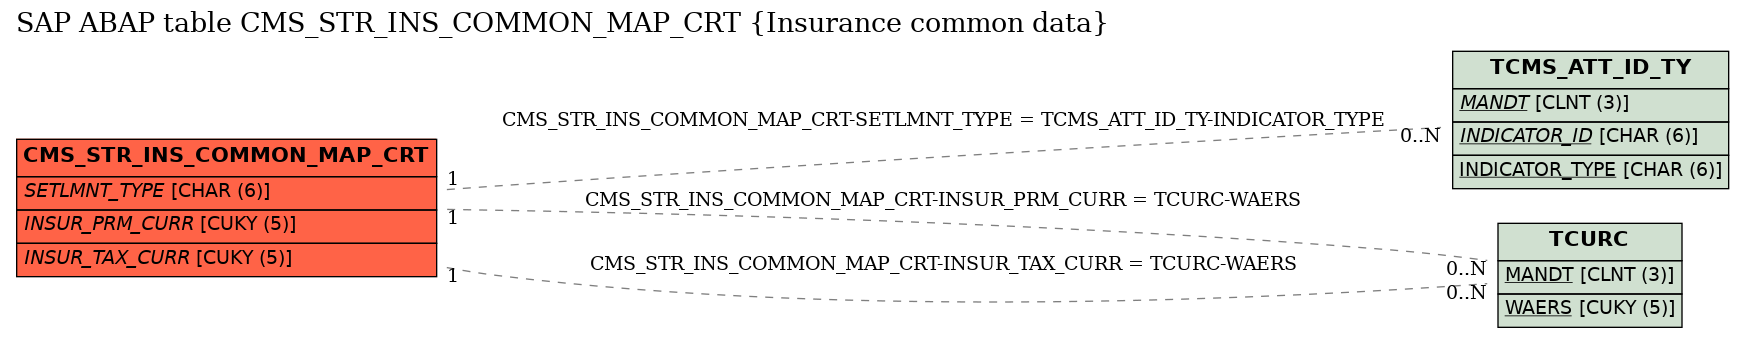 E-R Diagram for table CMS_STR_INS_COMMON_MAP_CRT (Insurance common data)